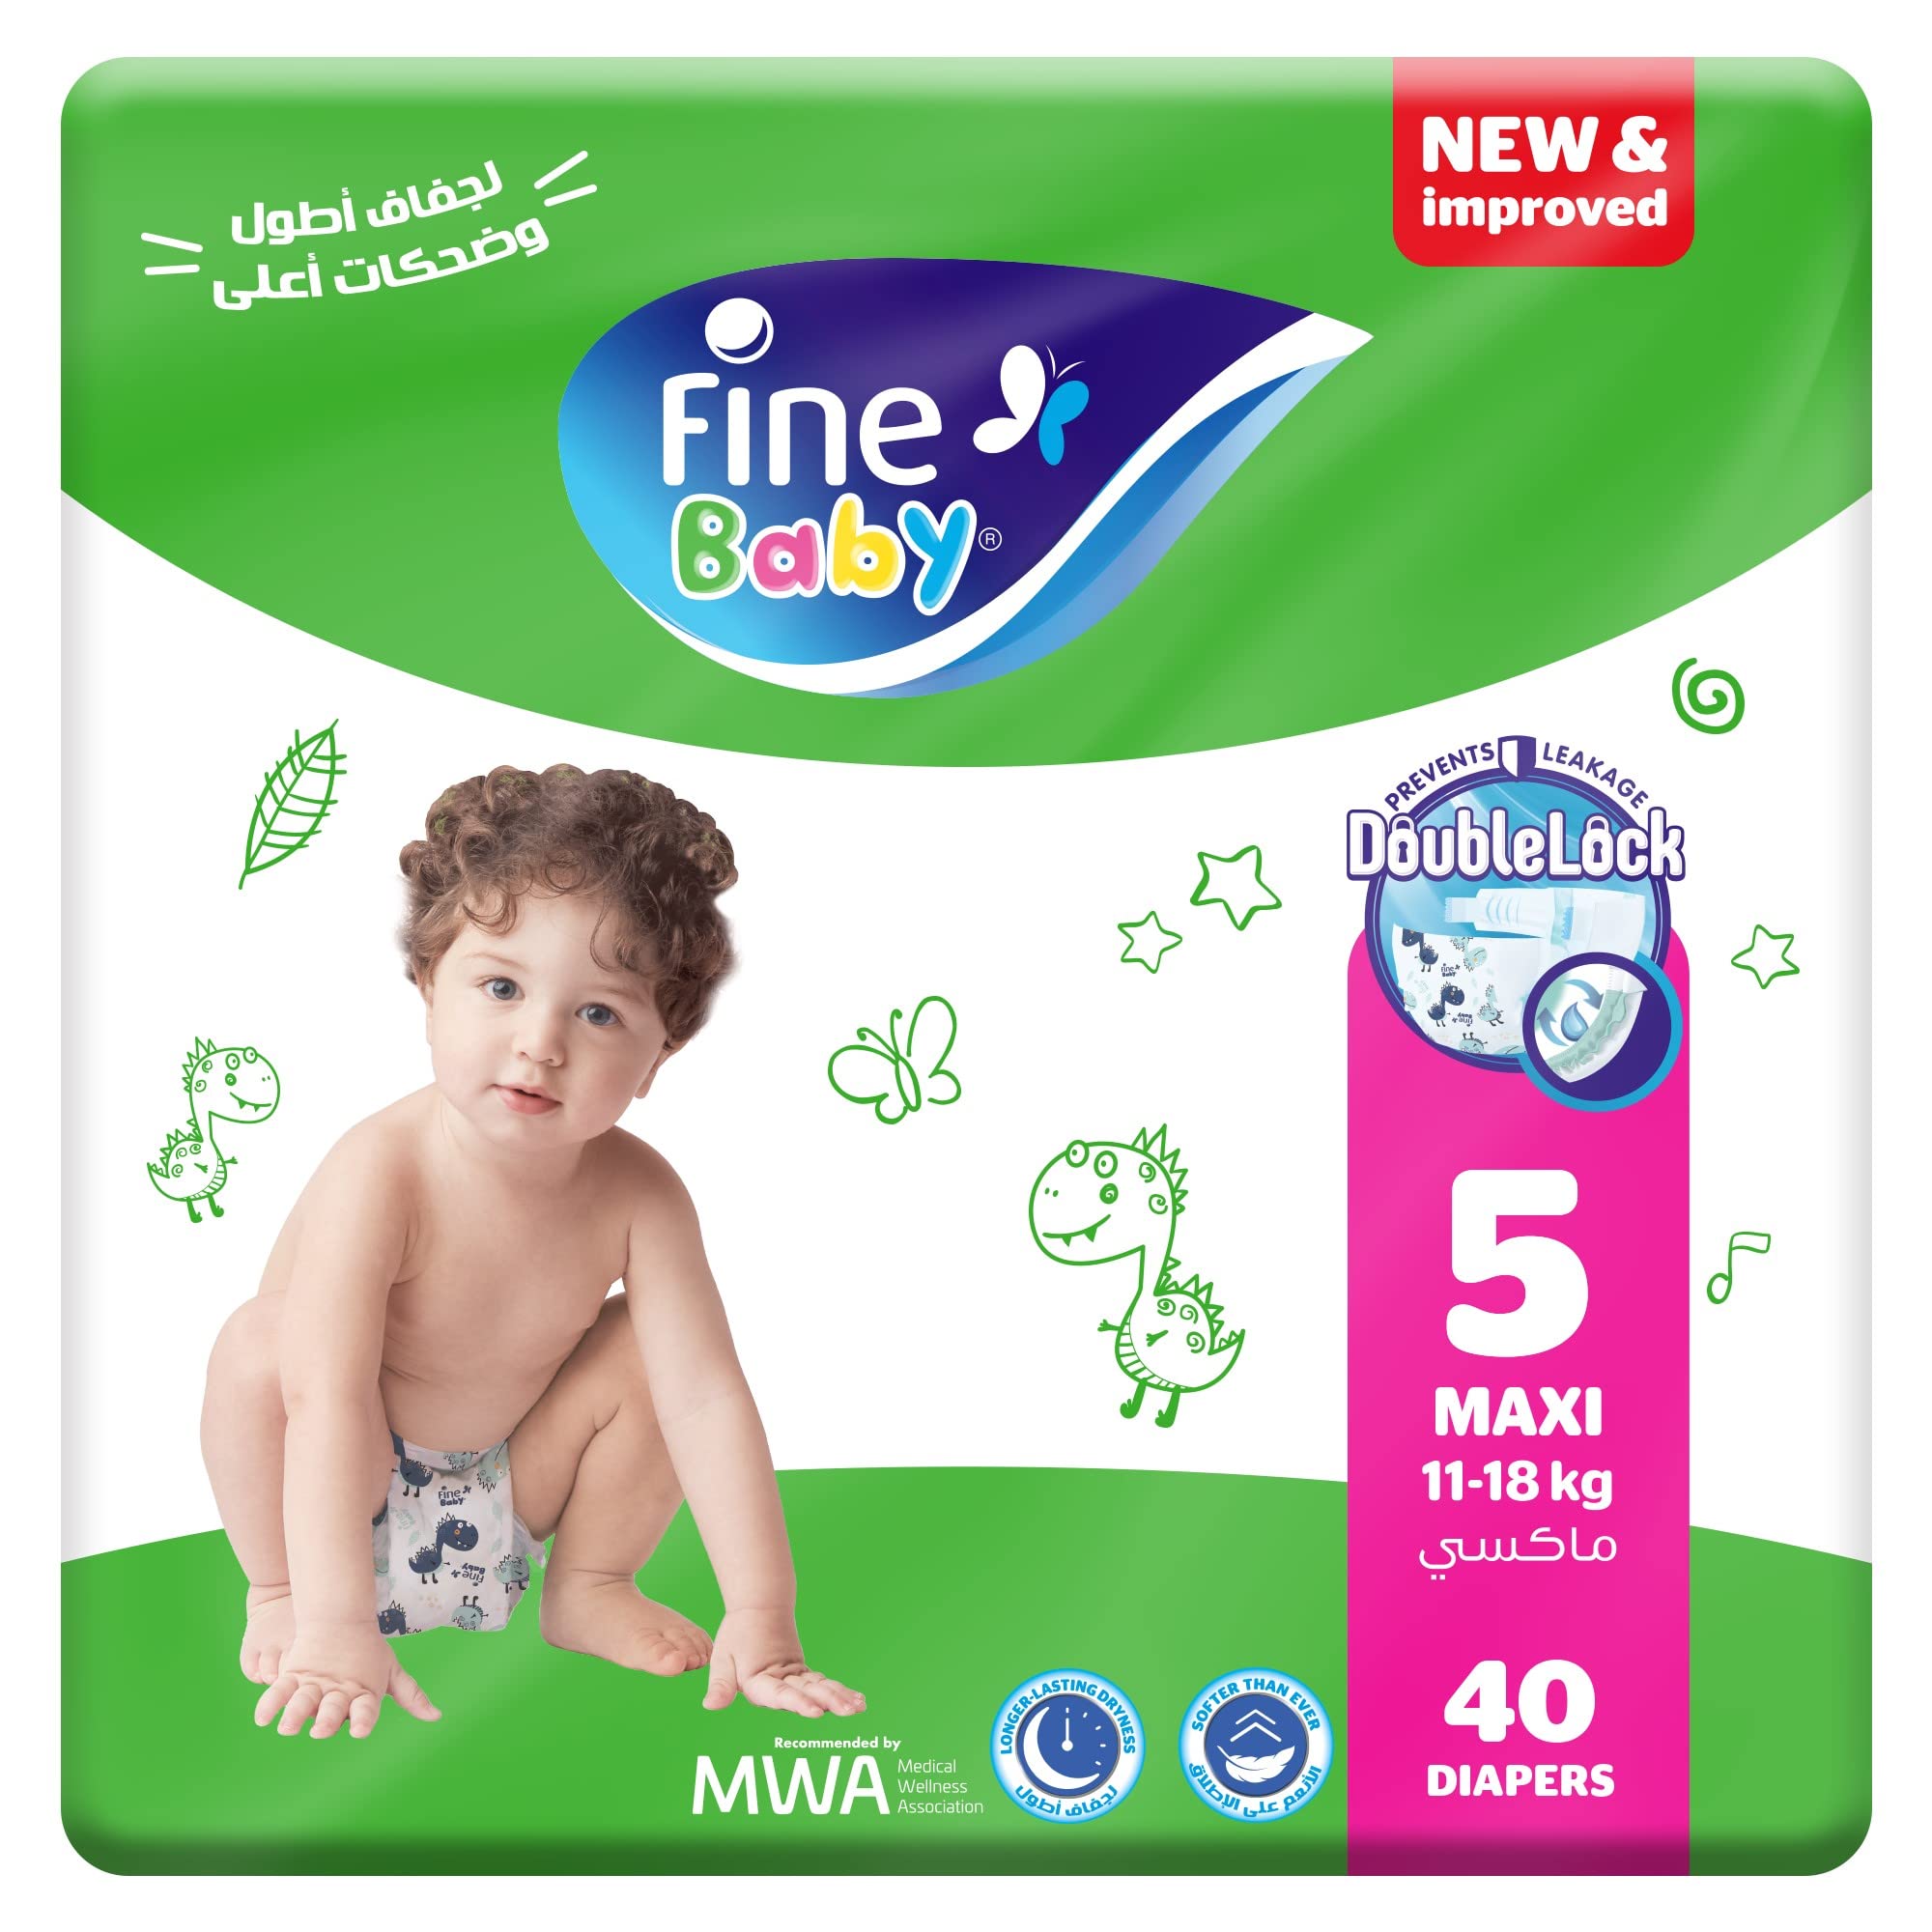 Baby Diapers Size 5 (11-18kg) Maxi, 40 count - Fine Baby with the new Double Lock leak barriers حفاظات فاين بيبي بلوشن لمسة الأم، حجم ماكسي 10-22 كغم، العبوة الكبيرة 40 حفاظة